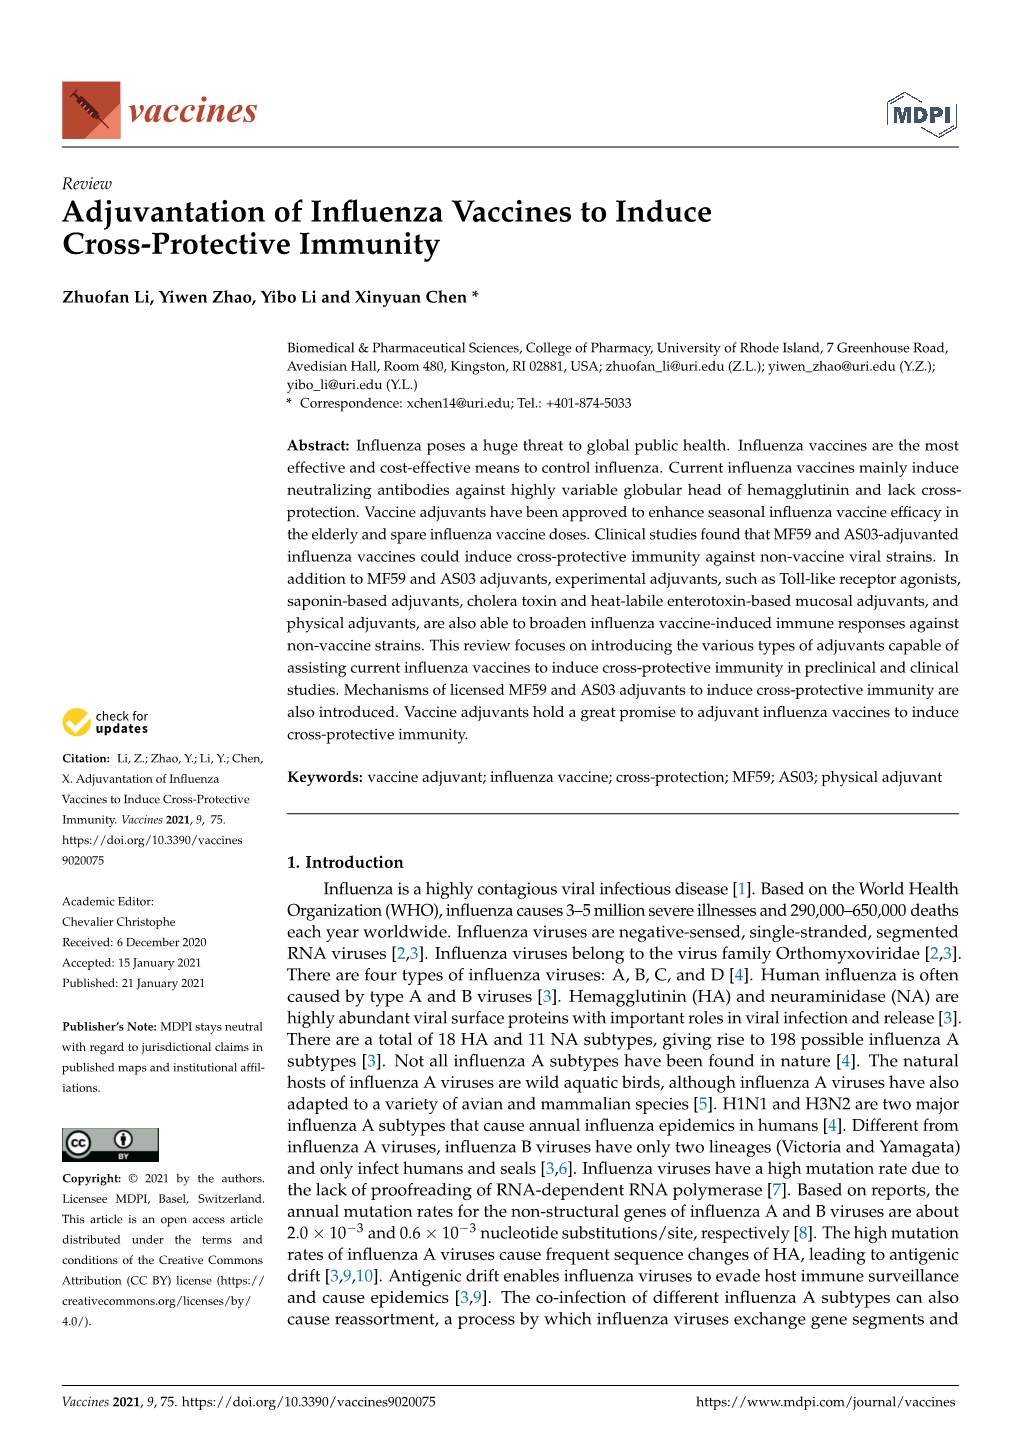 Adjuvantation of Influenza Vaccines to Induce Cross-Protective Immunity